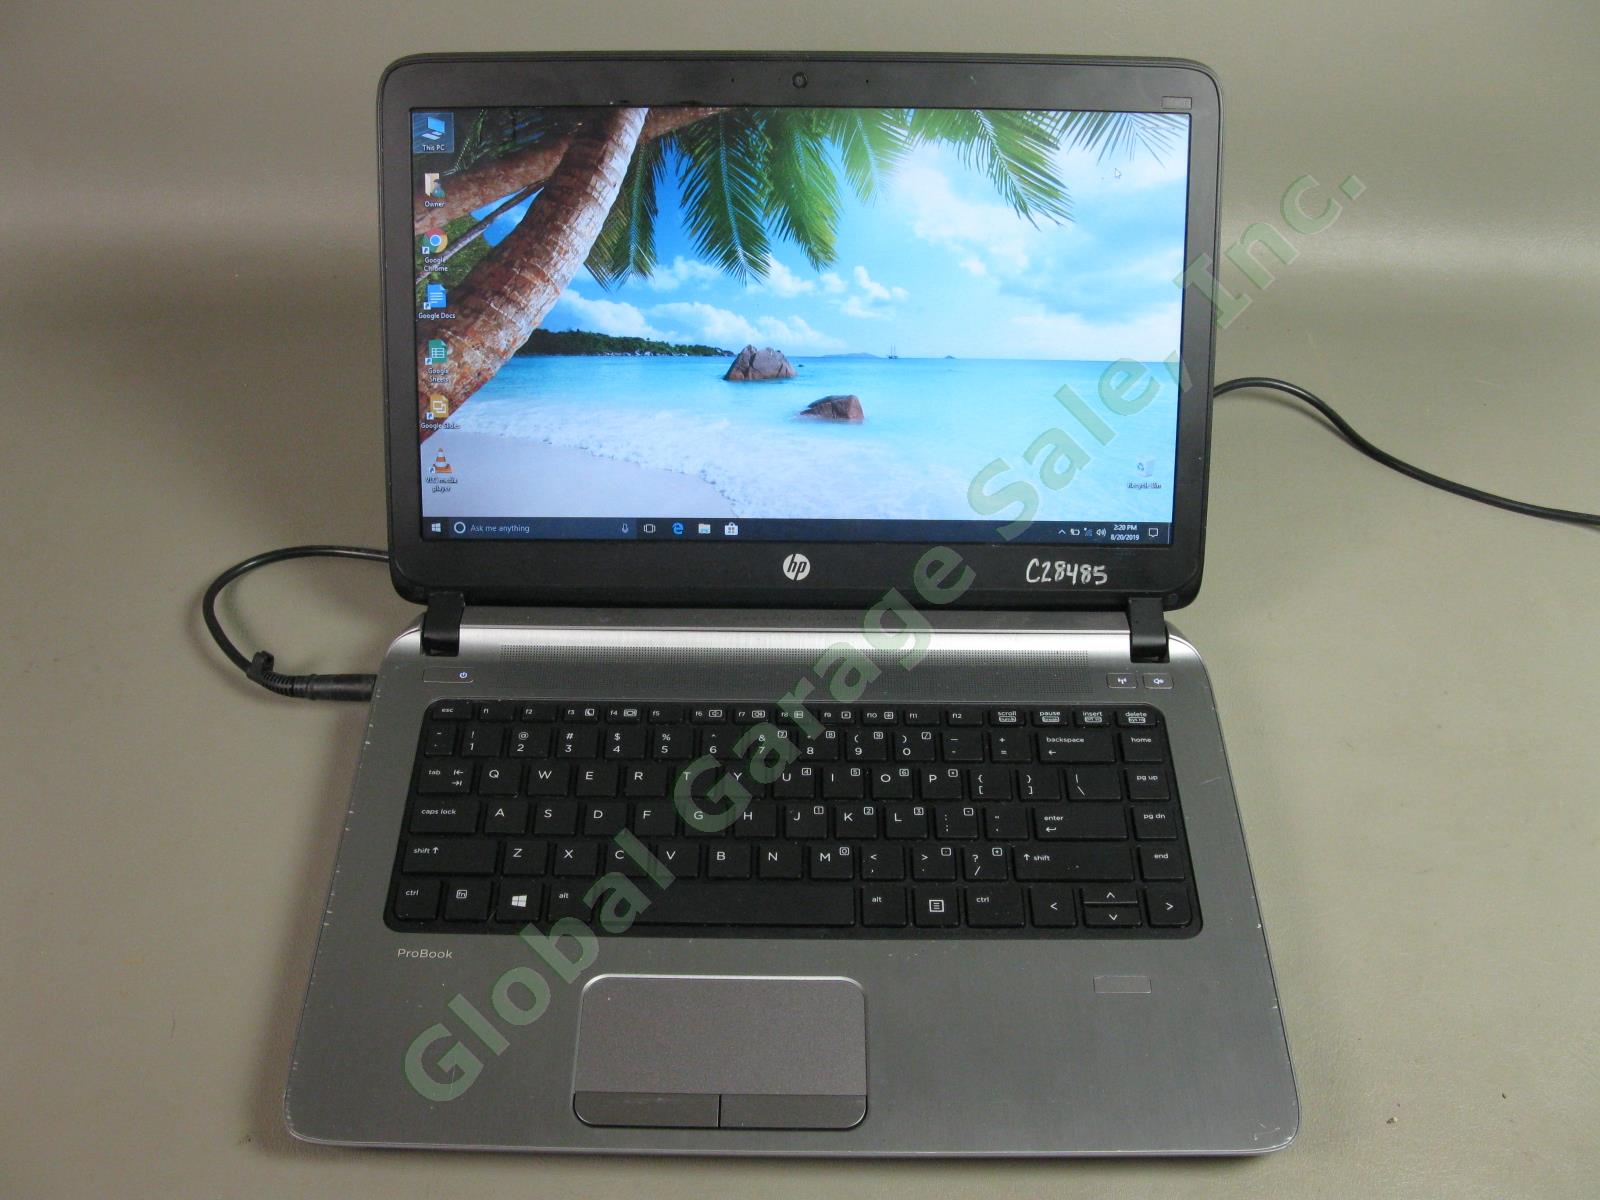 HP ProBook Laptop 440 G2 i5-5200U 2.20GHz 4GB RAM 460GB HD Windows 10 Pro Refurb